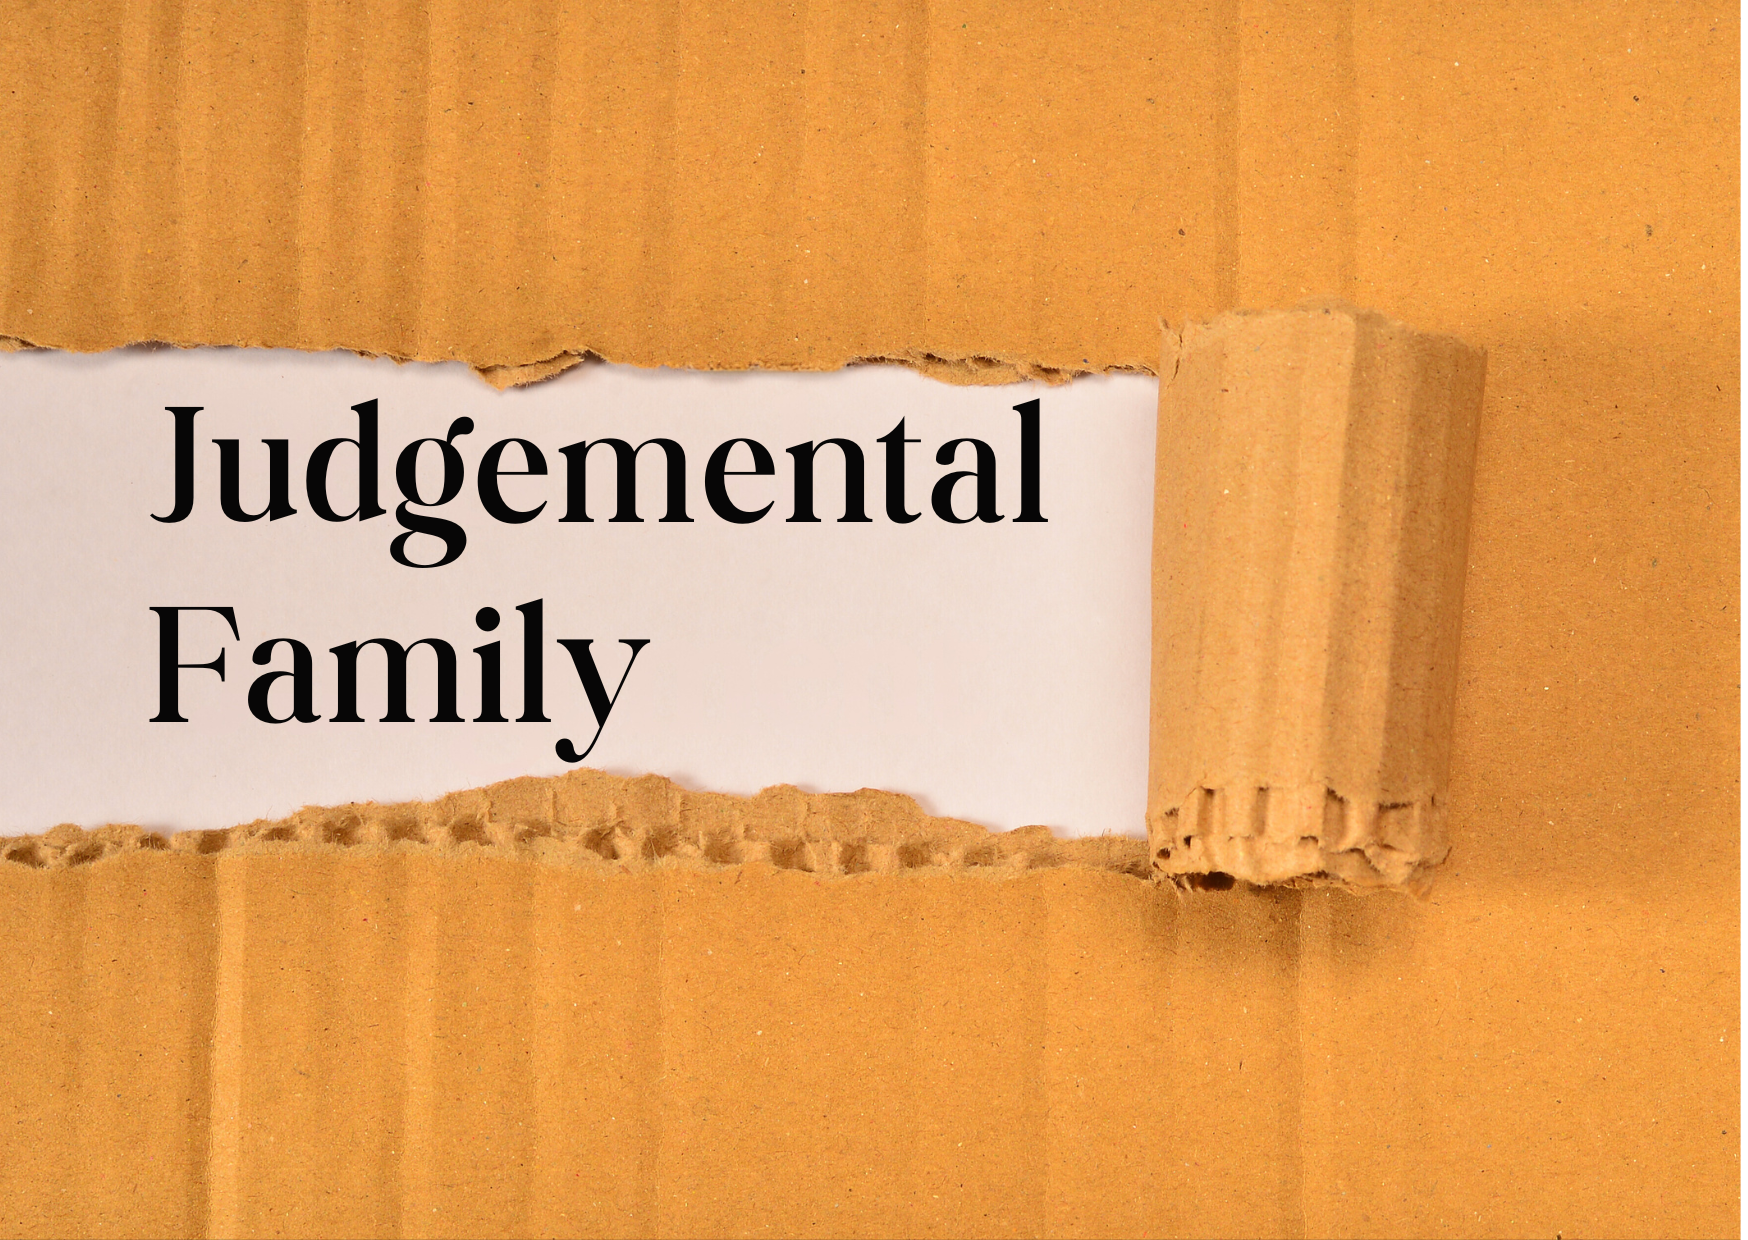 Judgemental Families